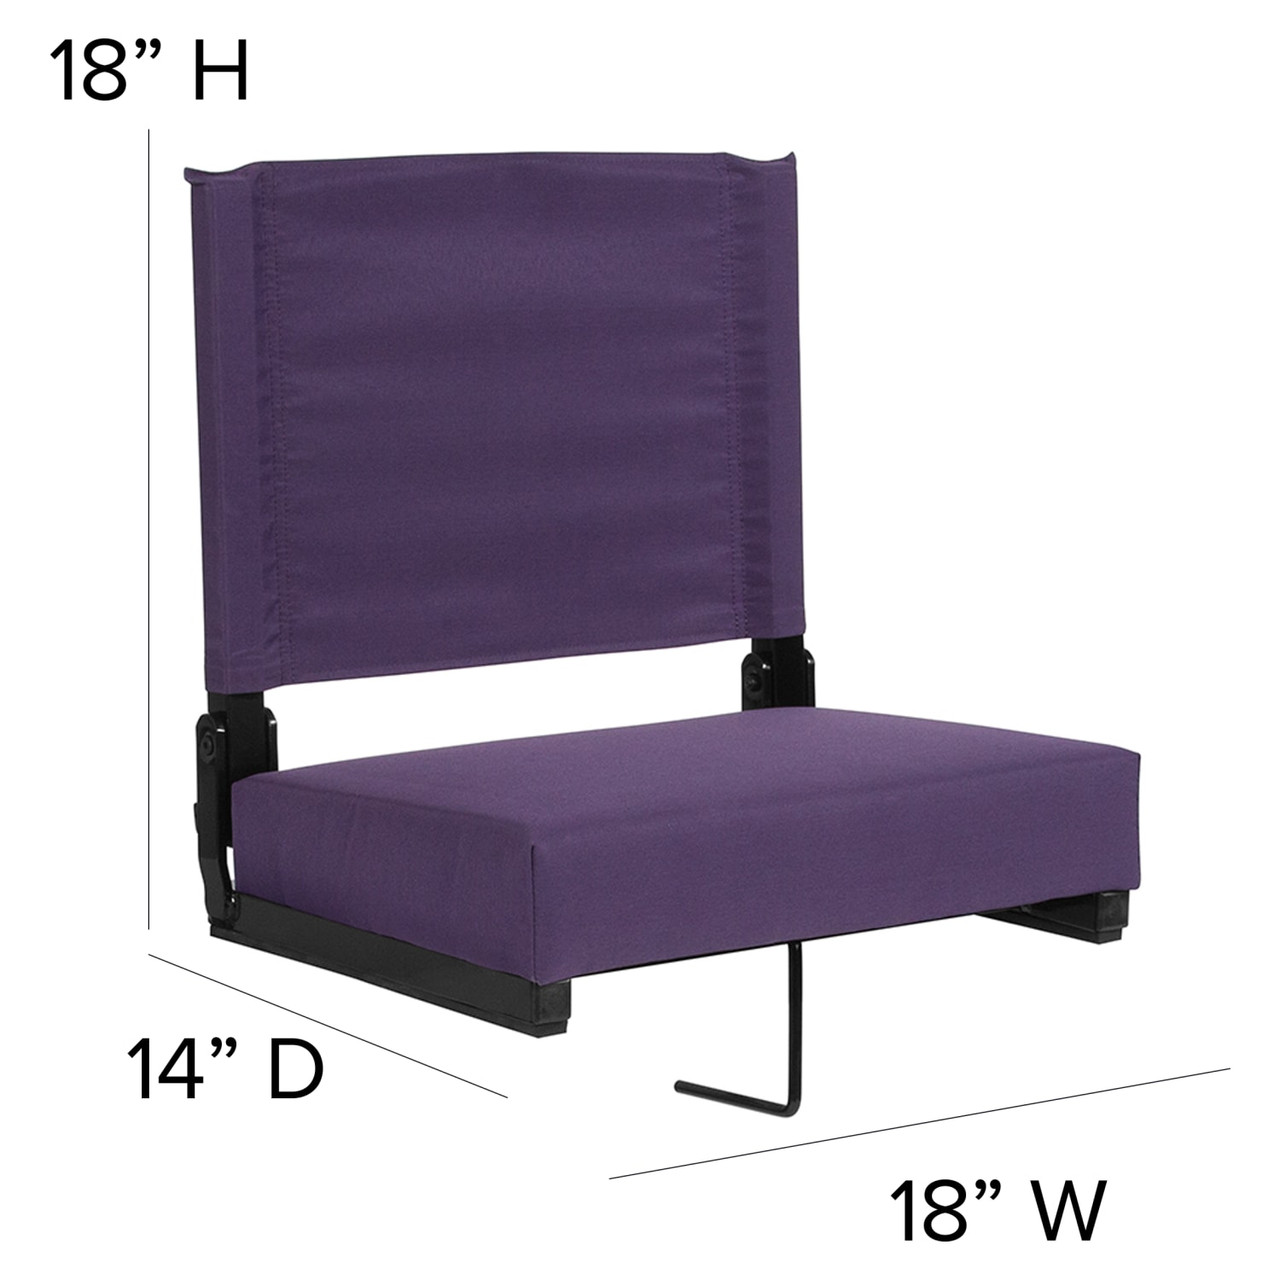 Grandstand Comfort Seats by Flash - Lightweight Stadium Chair with Handle & Ultra-Padded Seat, Dark Purple